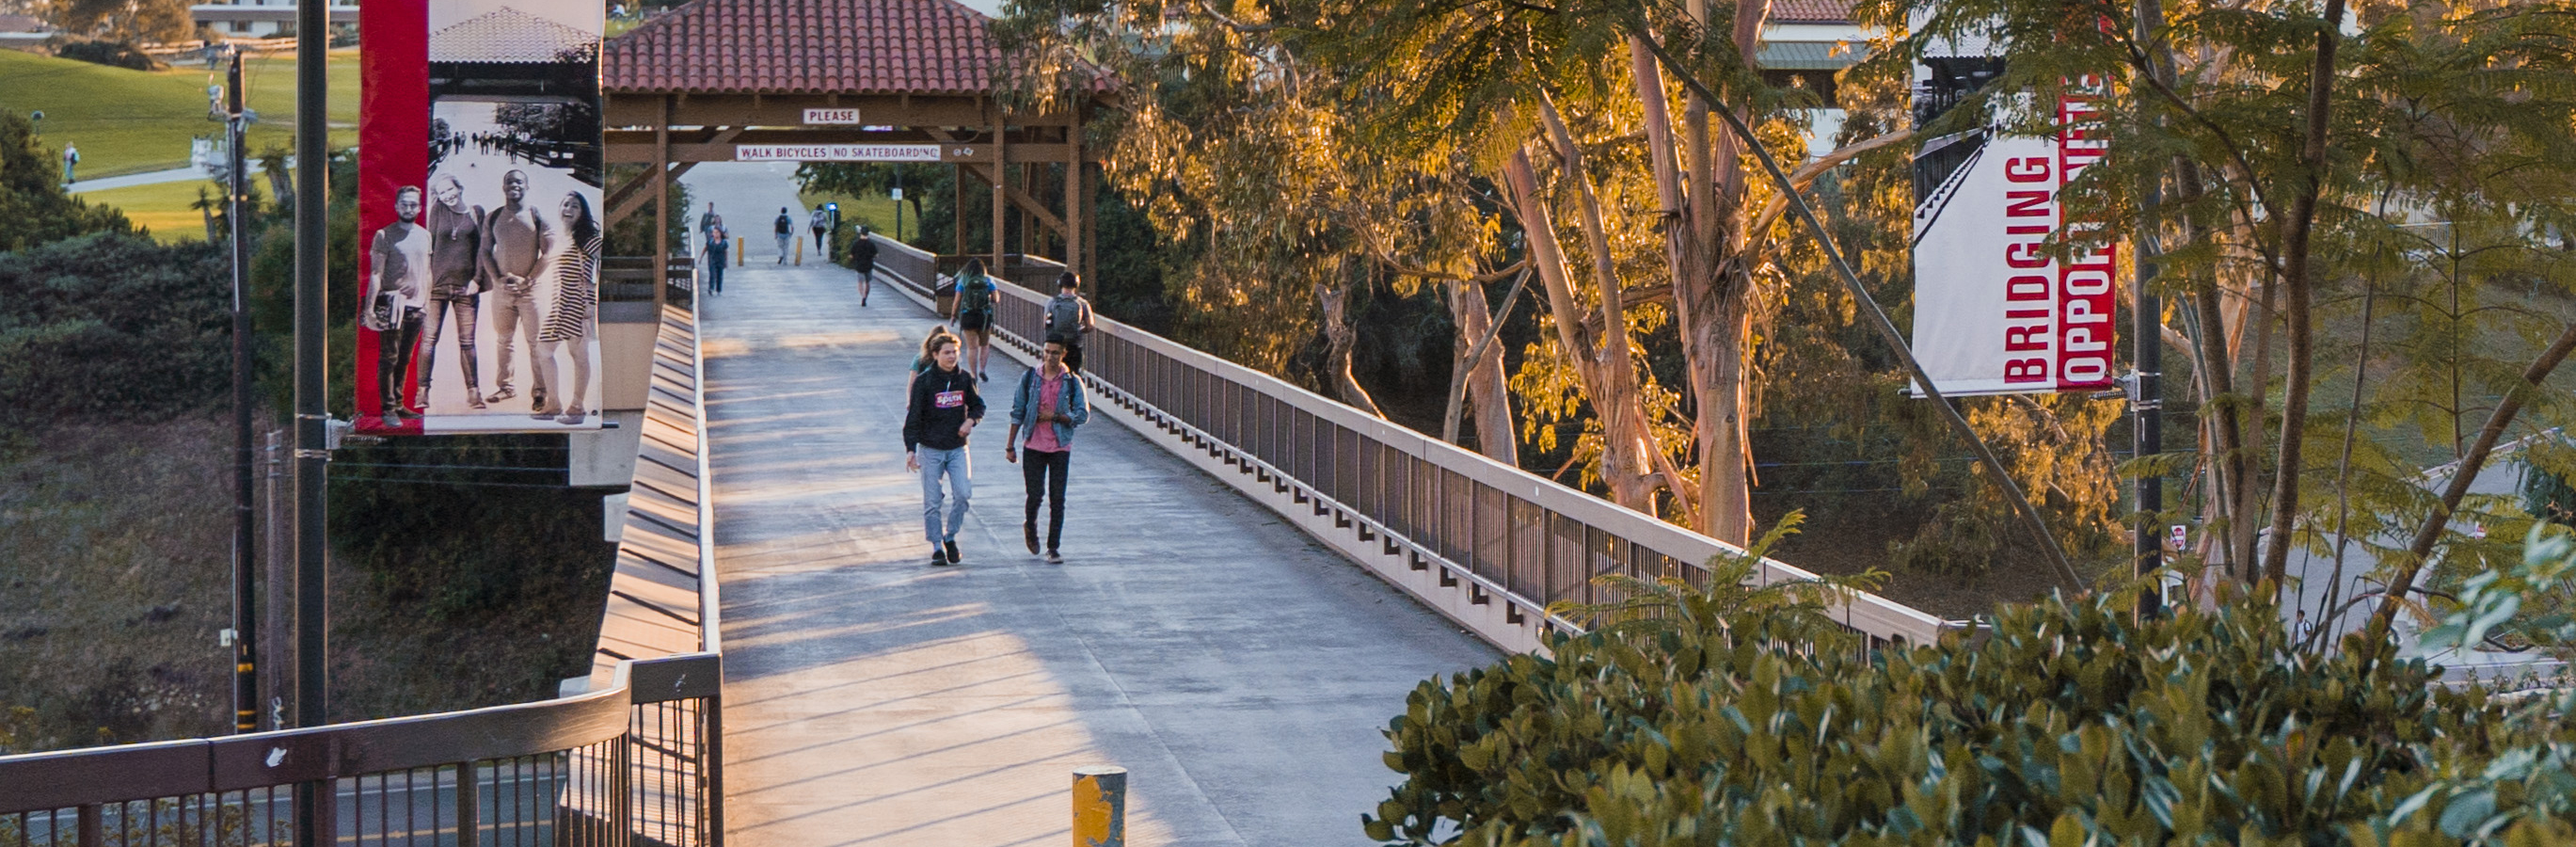 Santa Barbara City College students walking across the bridge.